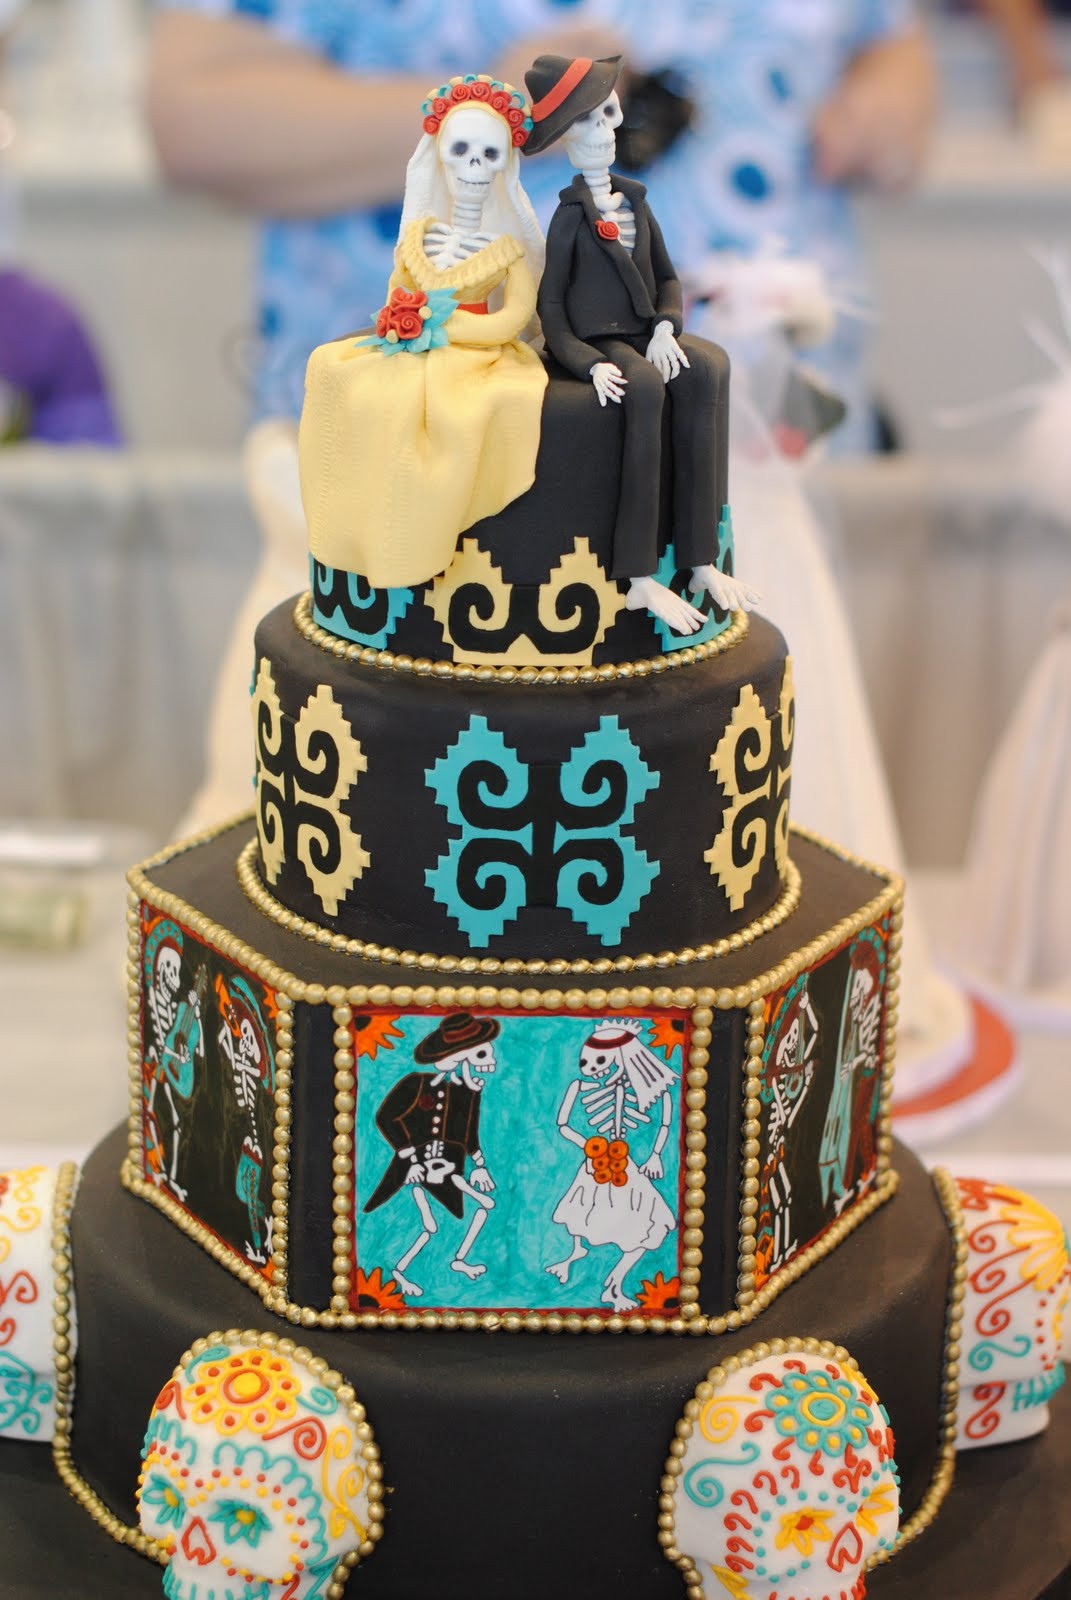 Dia De Los Muertos Wedding Cakes the Best Ideas for Rockabilly Wedding Cakes Dia De Los Muertos theme